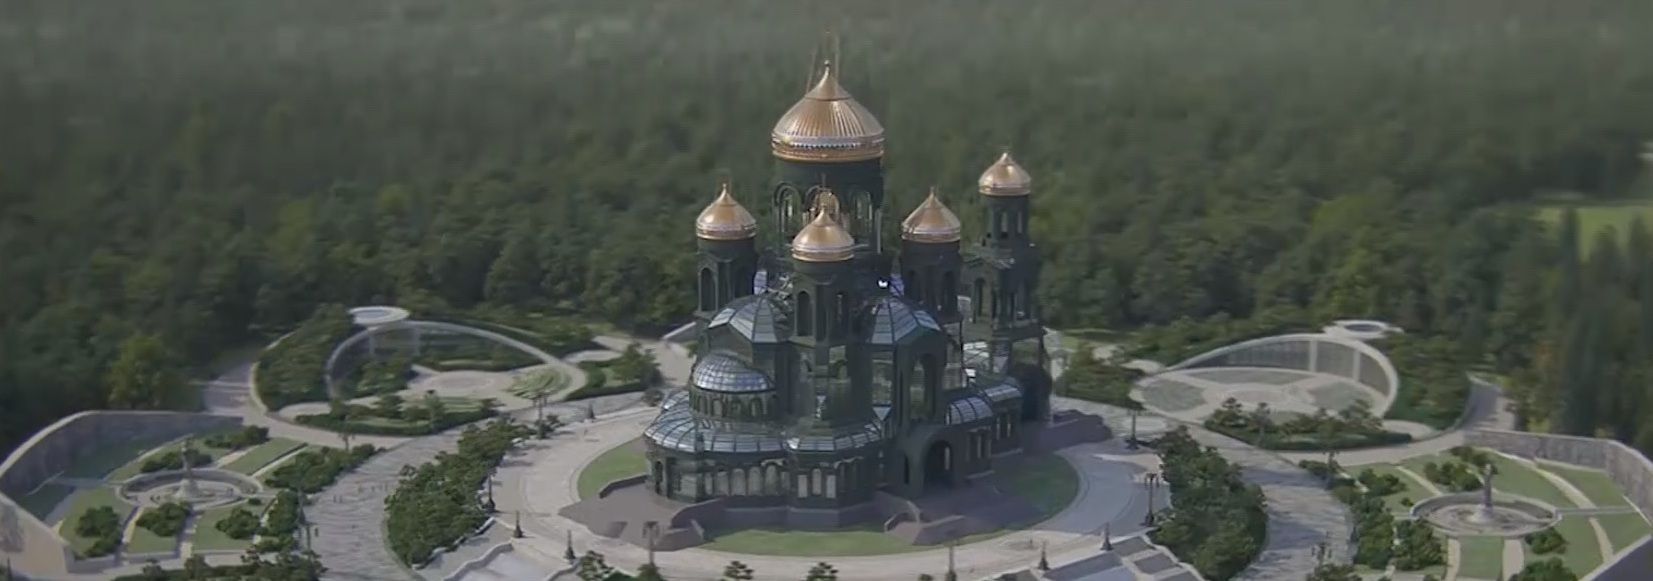 Hlavní chrám ruských ozbrojených sil v Rusku v barvách khaki. Návrh.